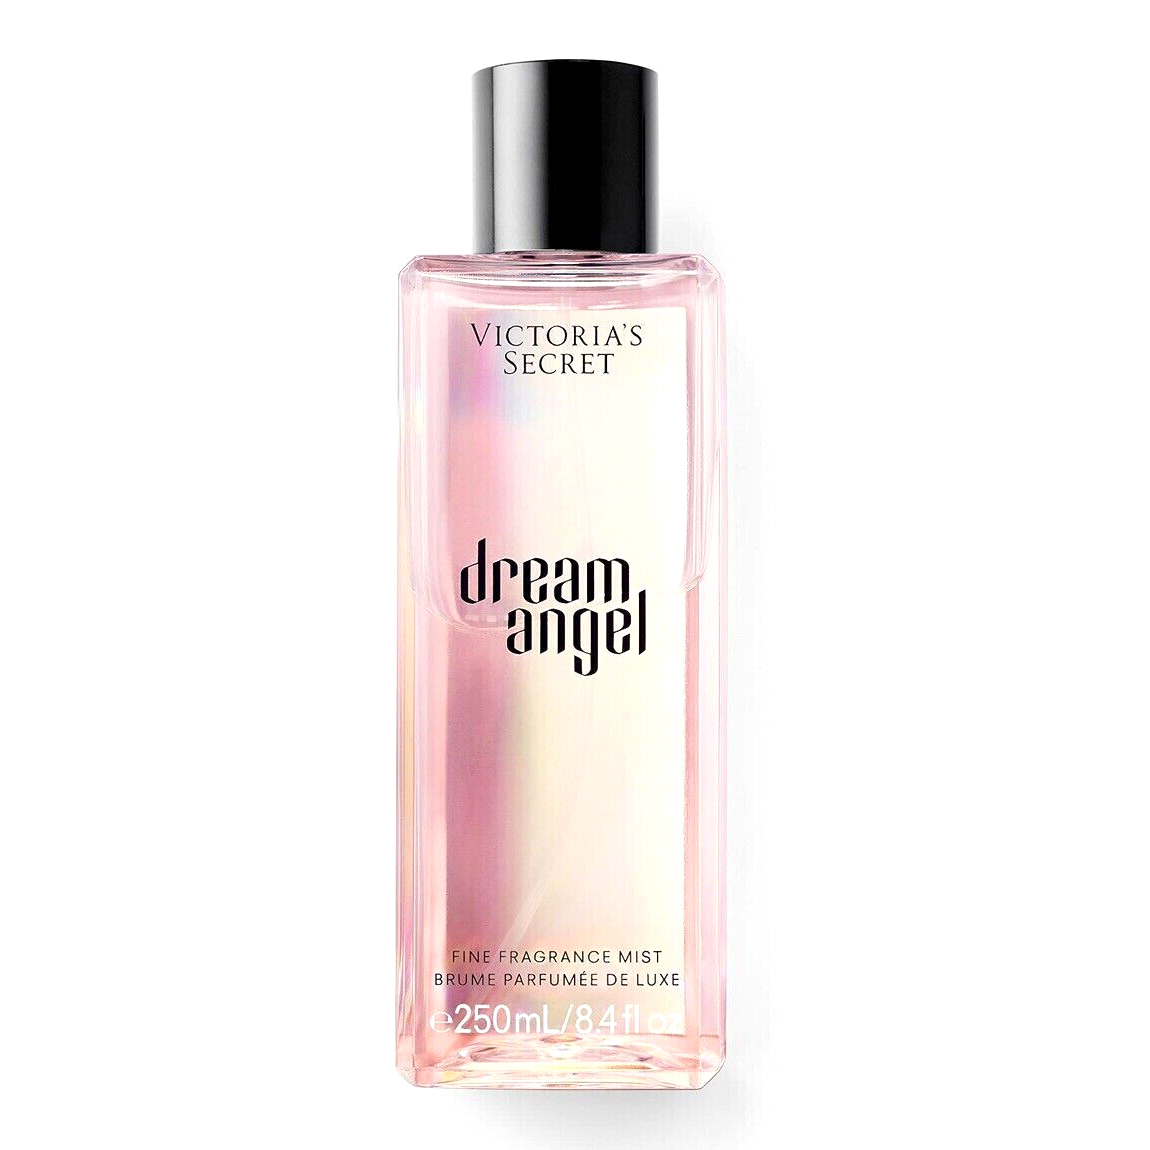 Victoria's Secret Fantasies Dream body spray for women